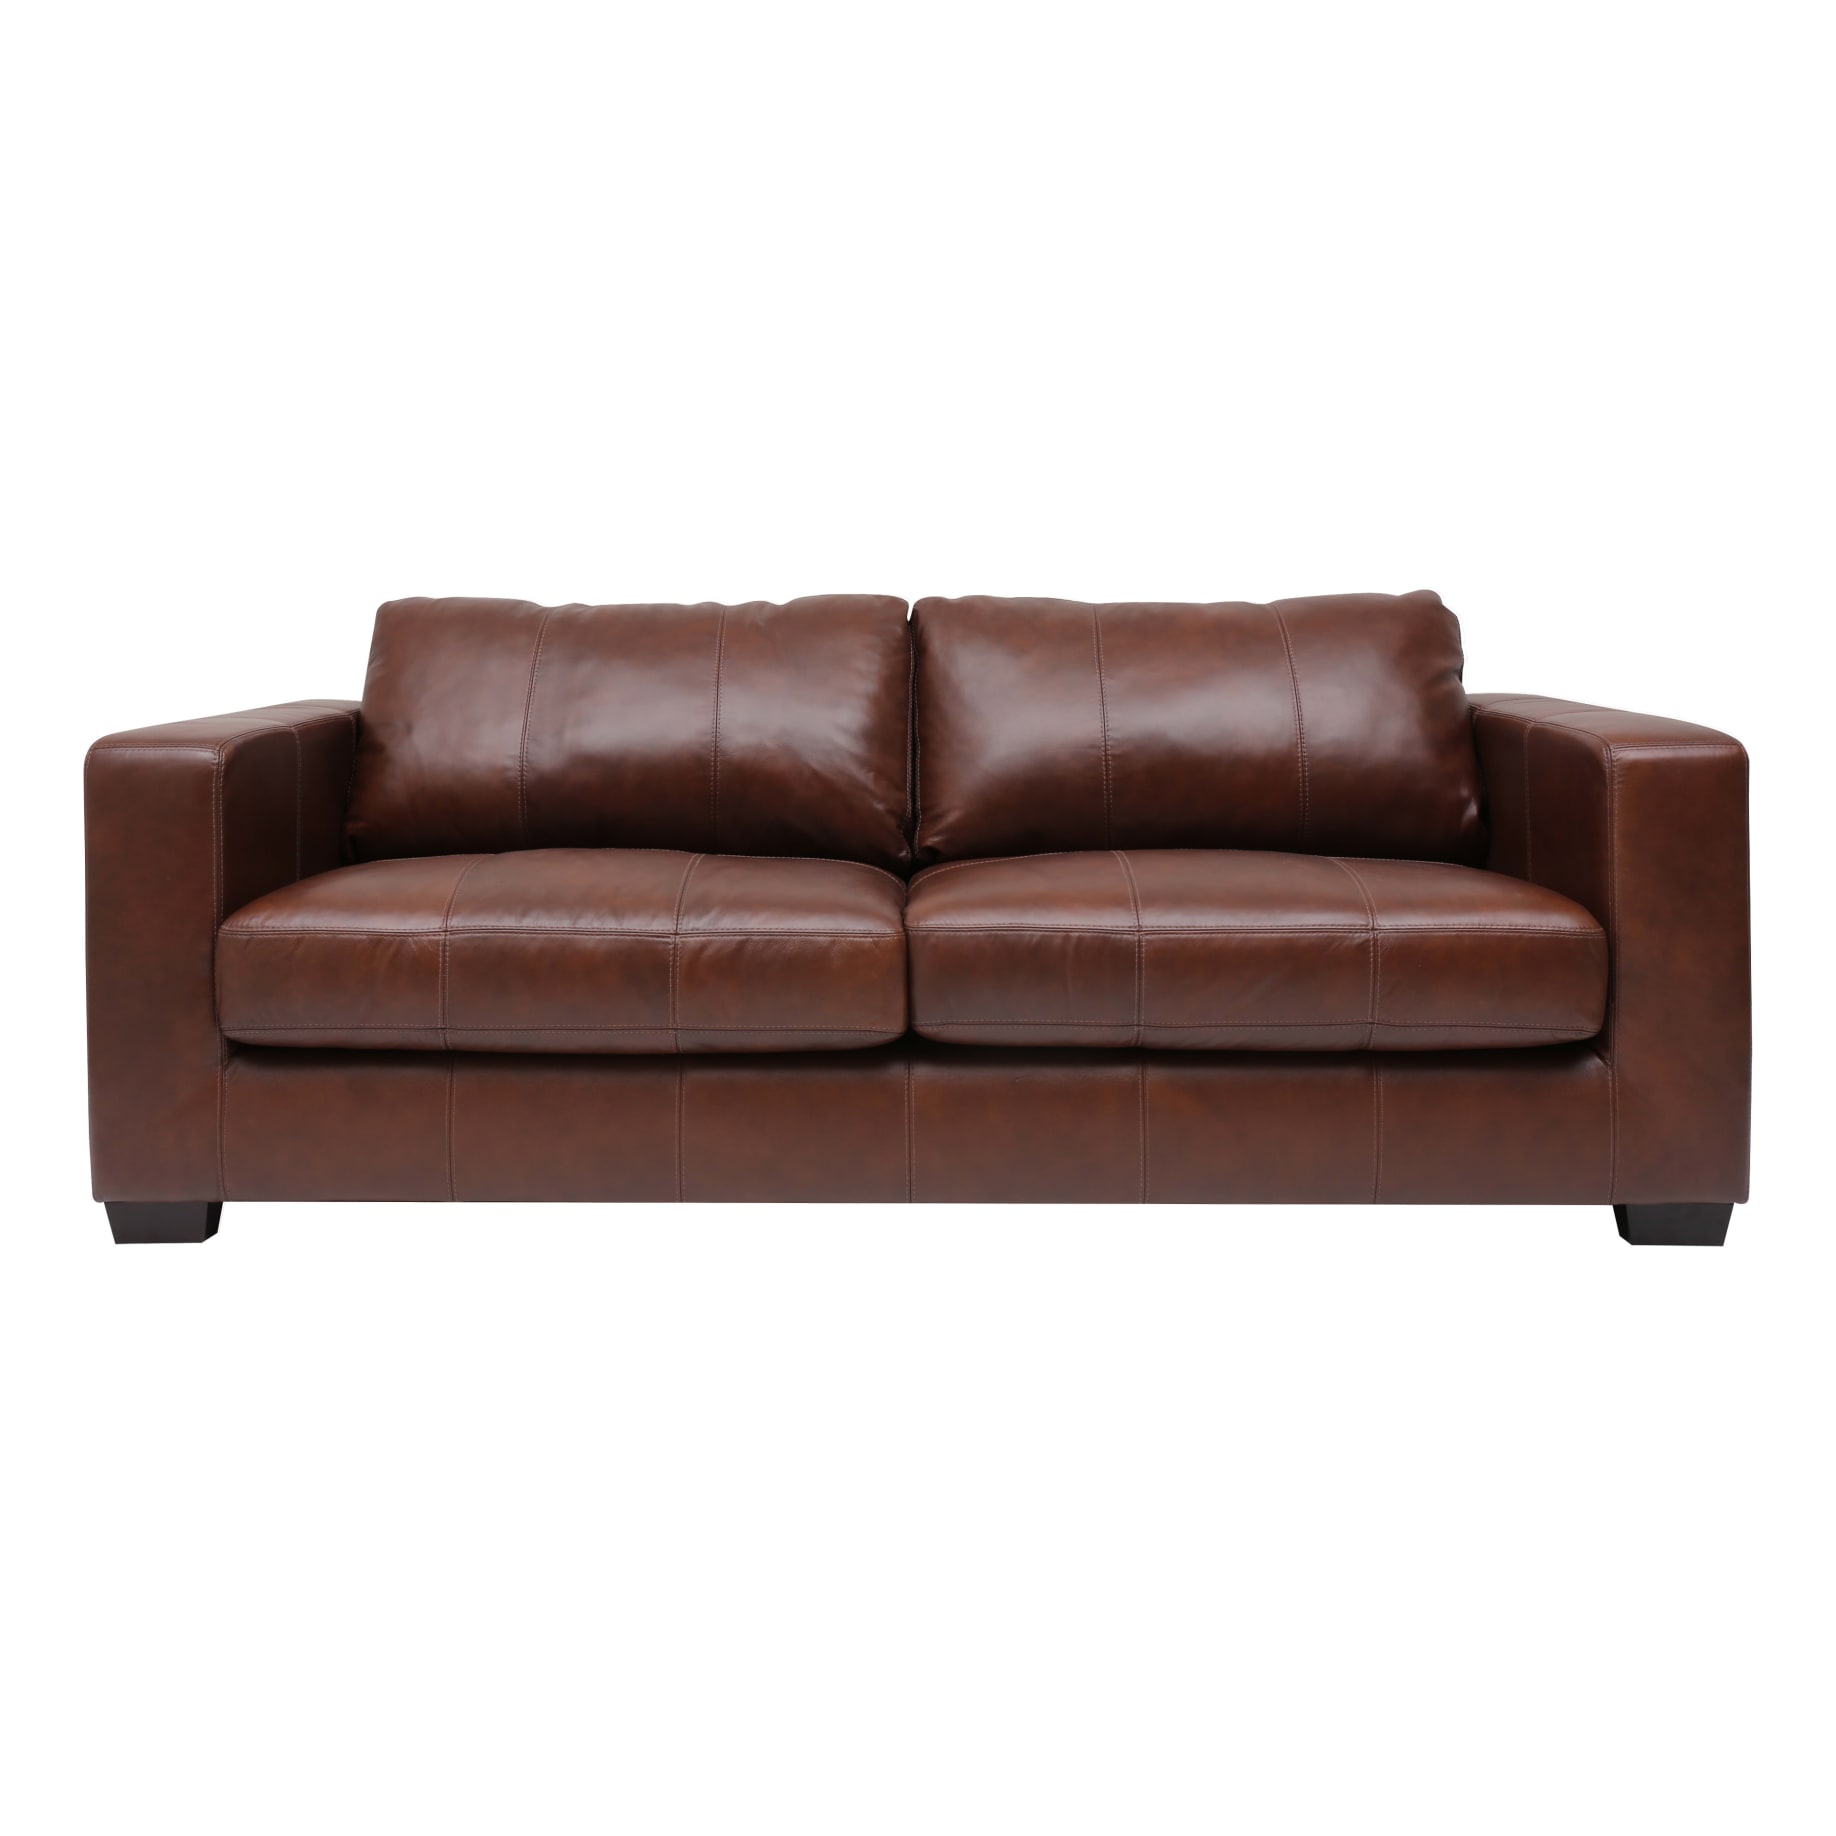 Gordon 3 Seater Sofa in Aniline Leather Natural